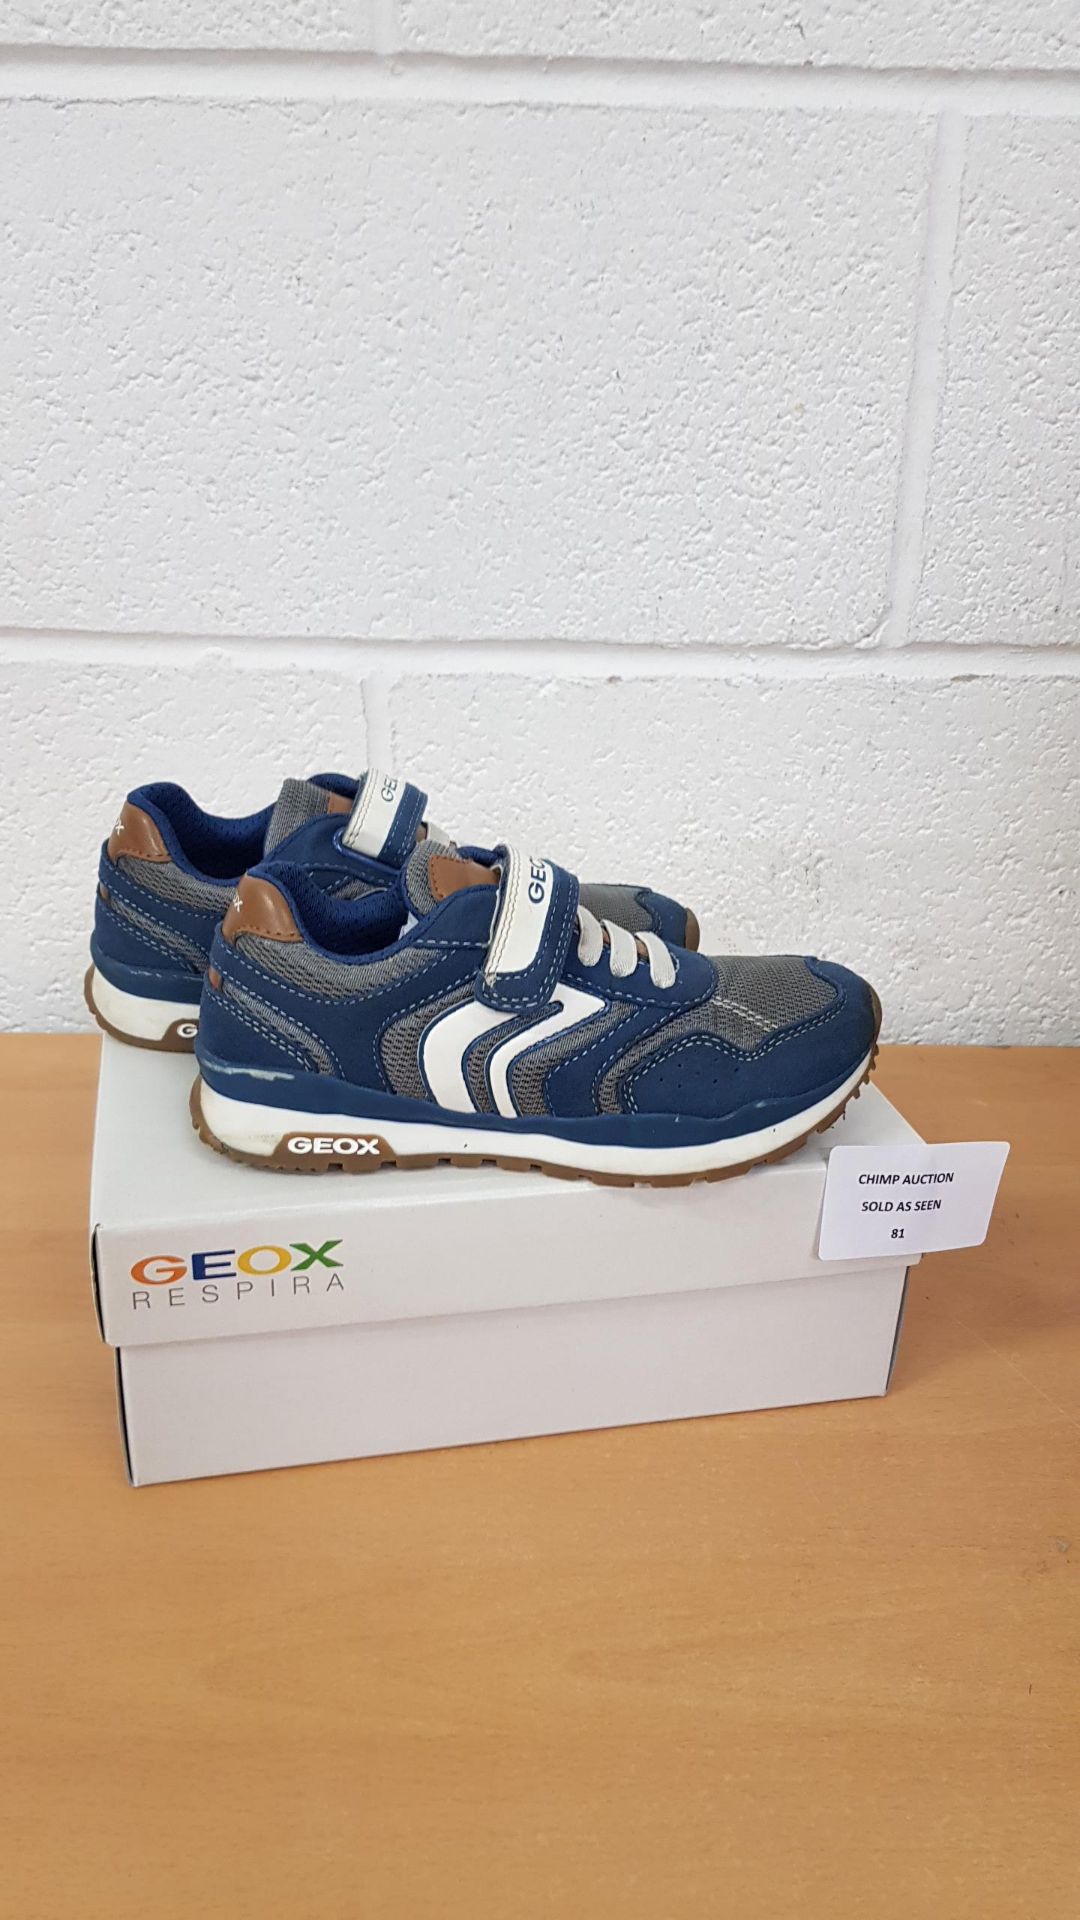 Geox Respira kids shoes UK 13